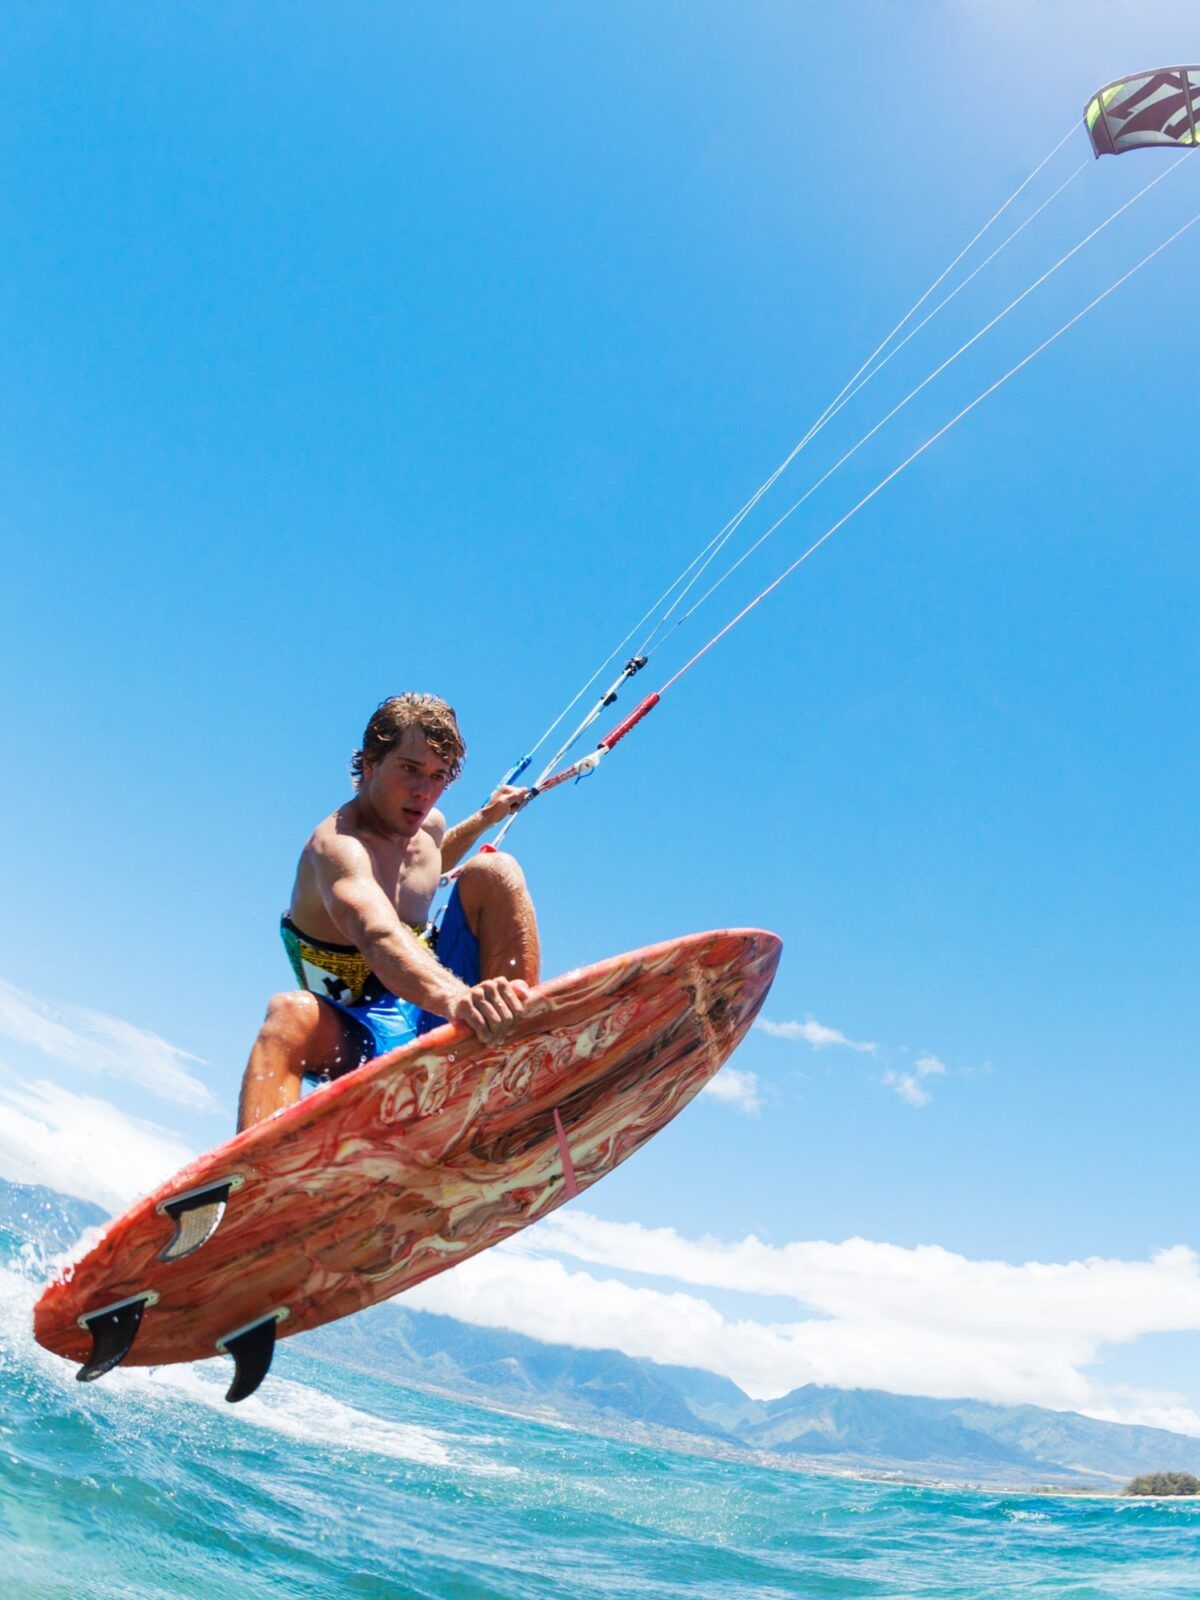 Kite Surfing, Fun in the Ocean